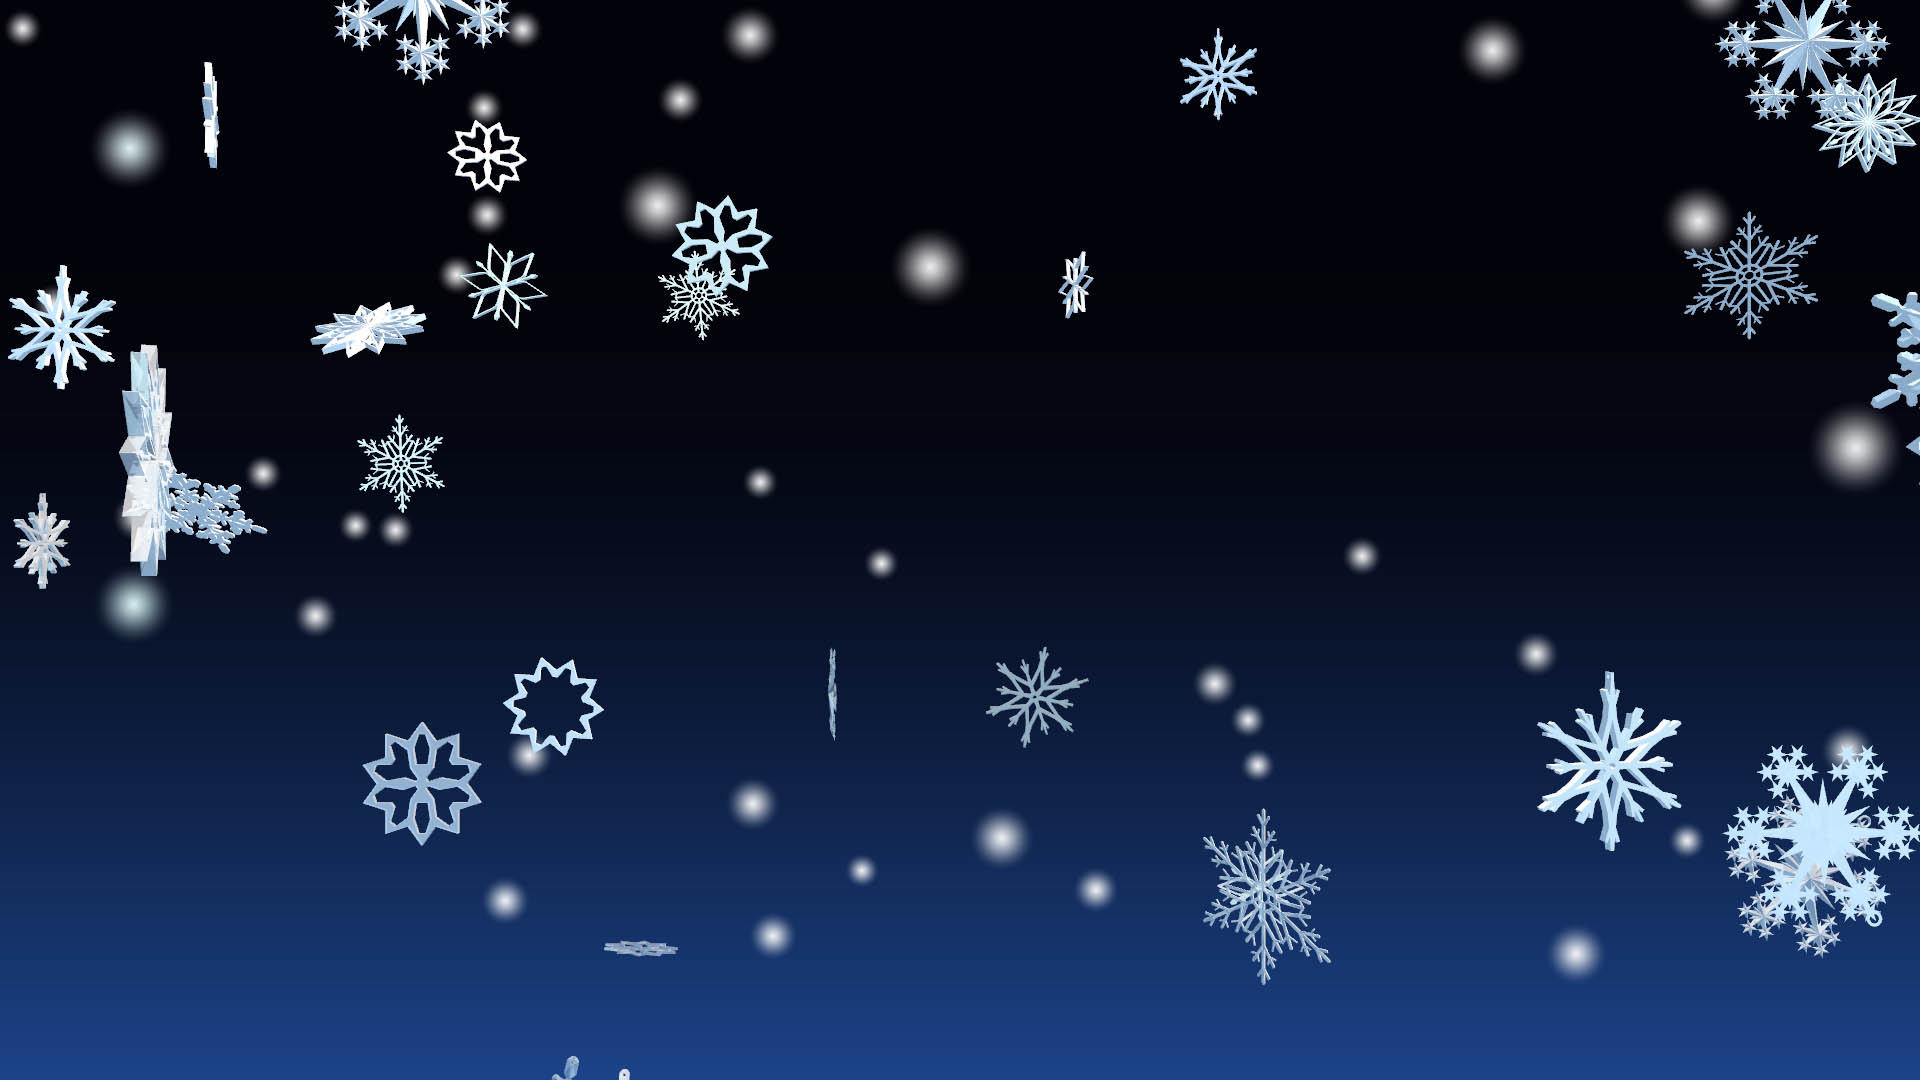 3D Winter Snowflakes Screensaver for Windows - 3D Snowflakes Screensaver